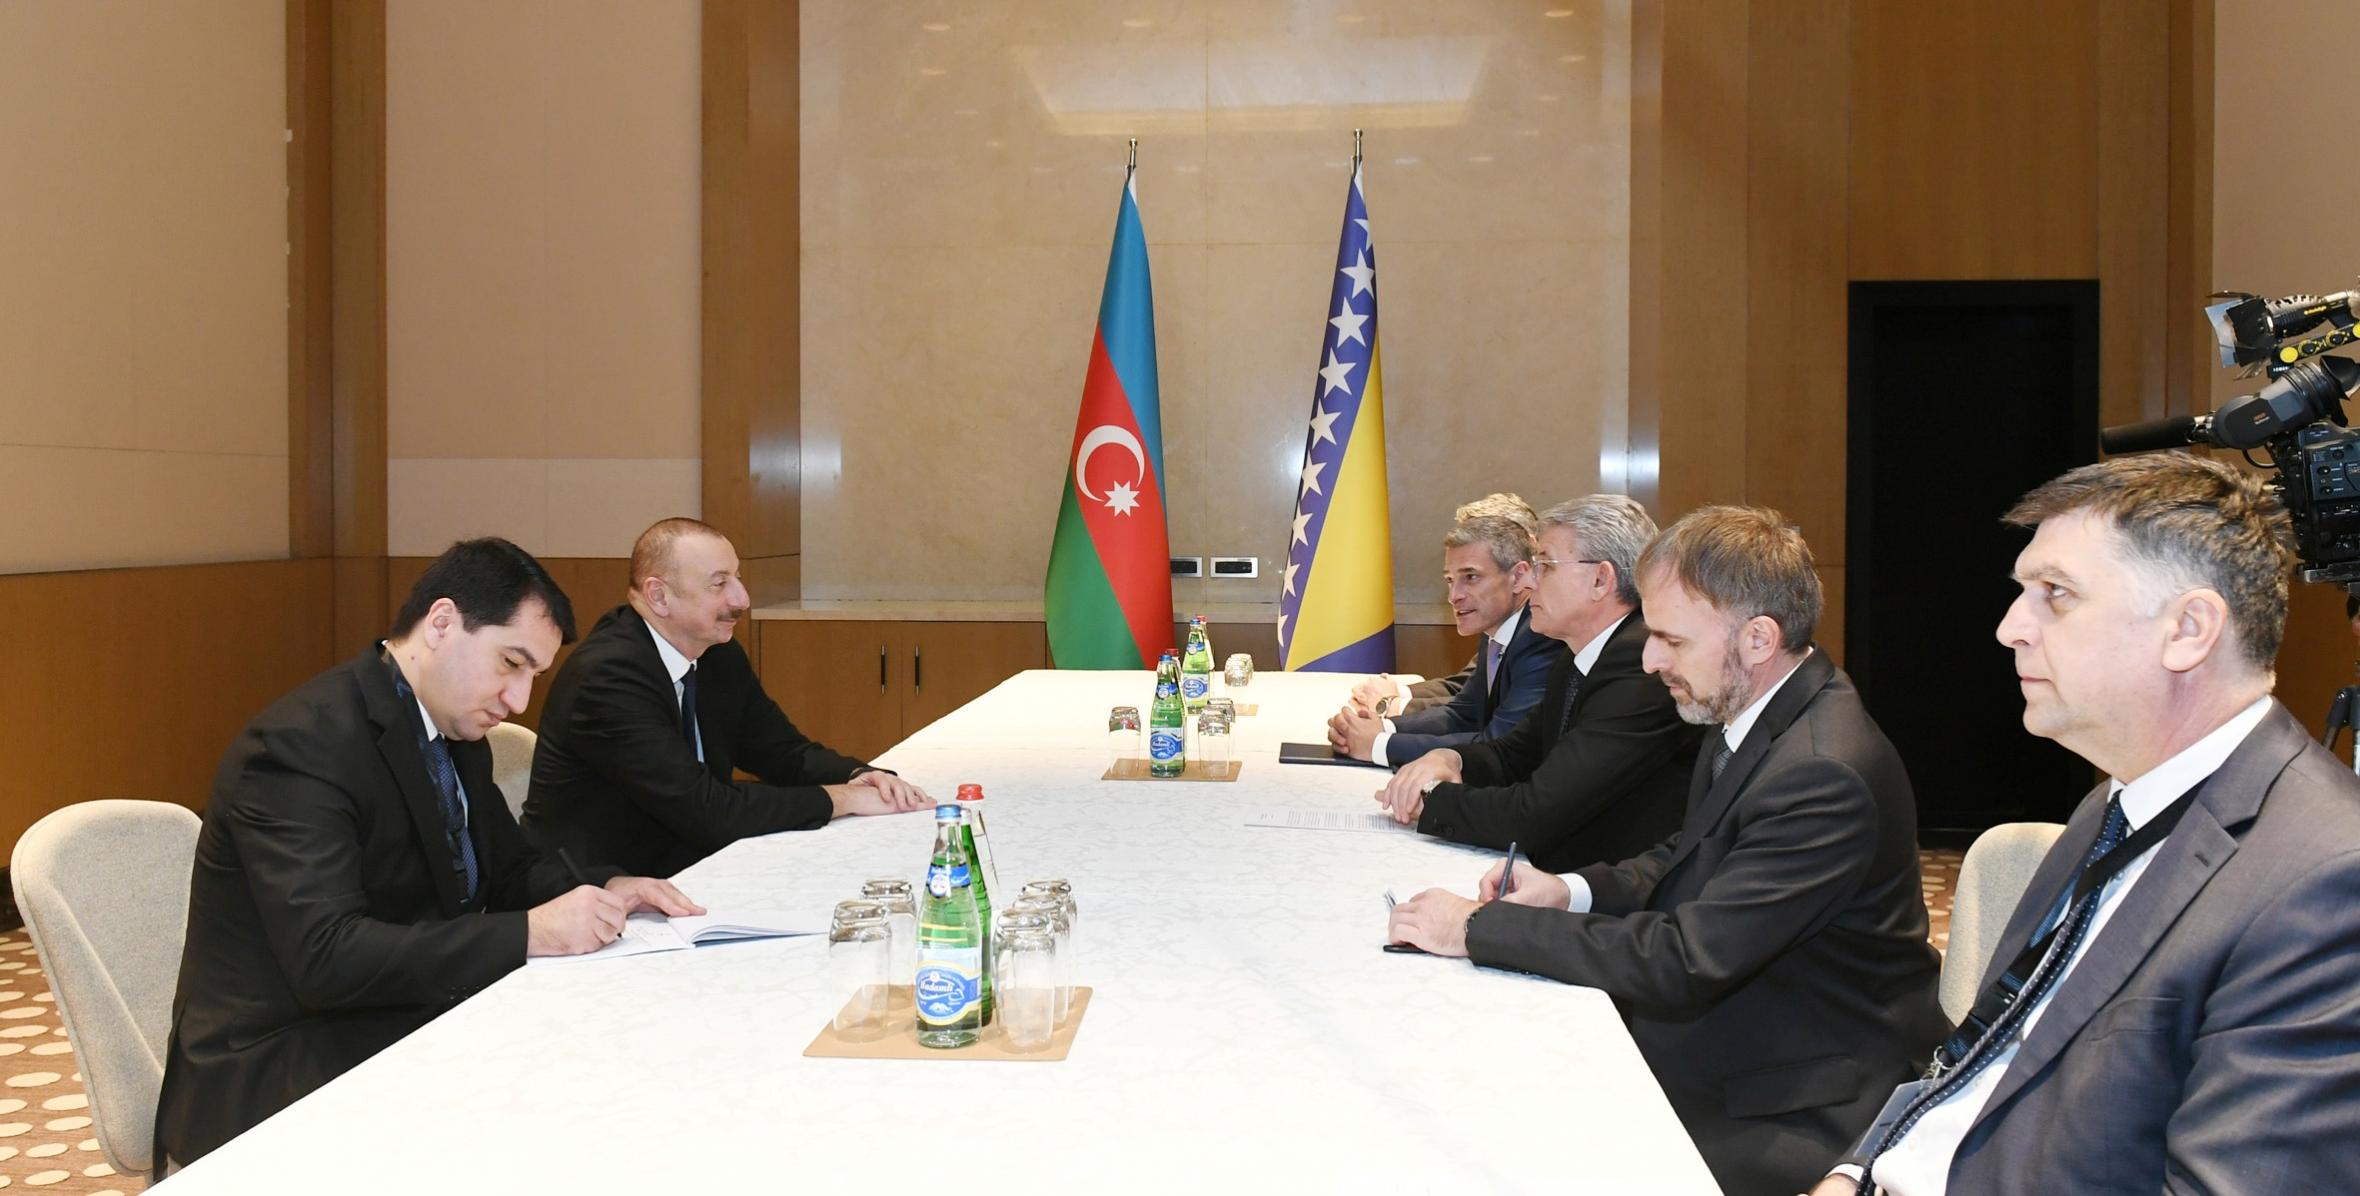 Ilham Aliyev met with Member of Presidency of Bosnia and Herzegovina Sefik Dzaferovic